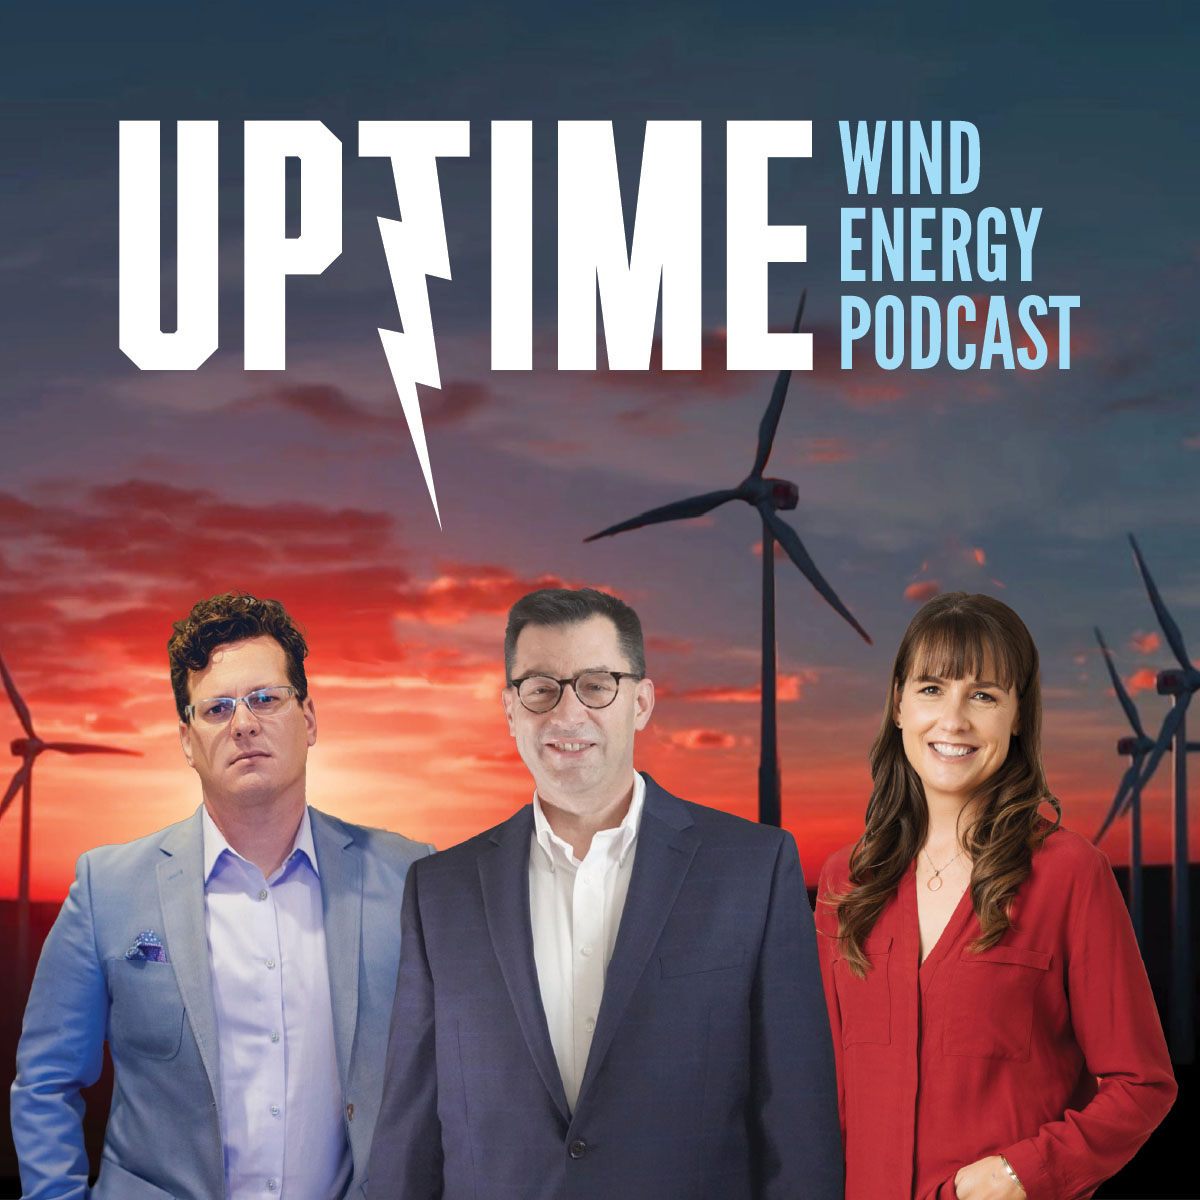 uptime wind energy podcast